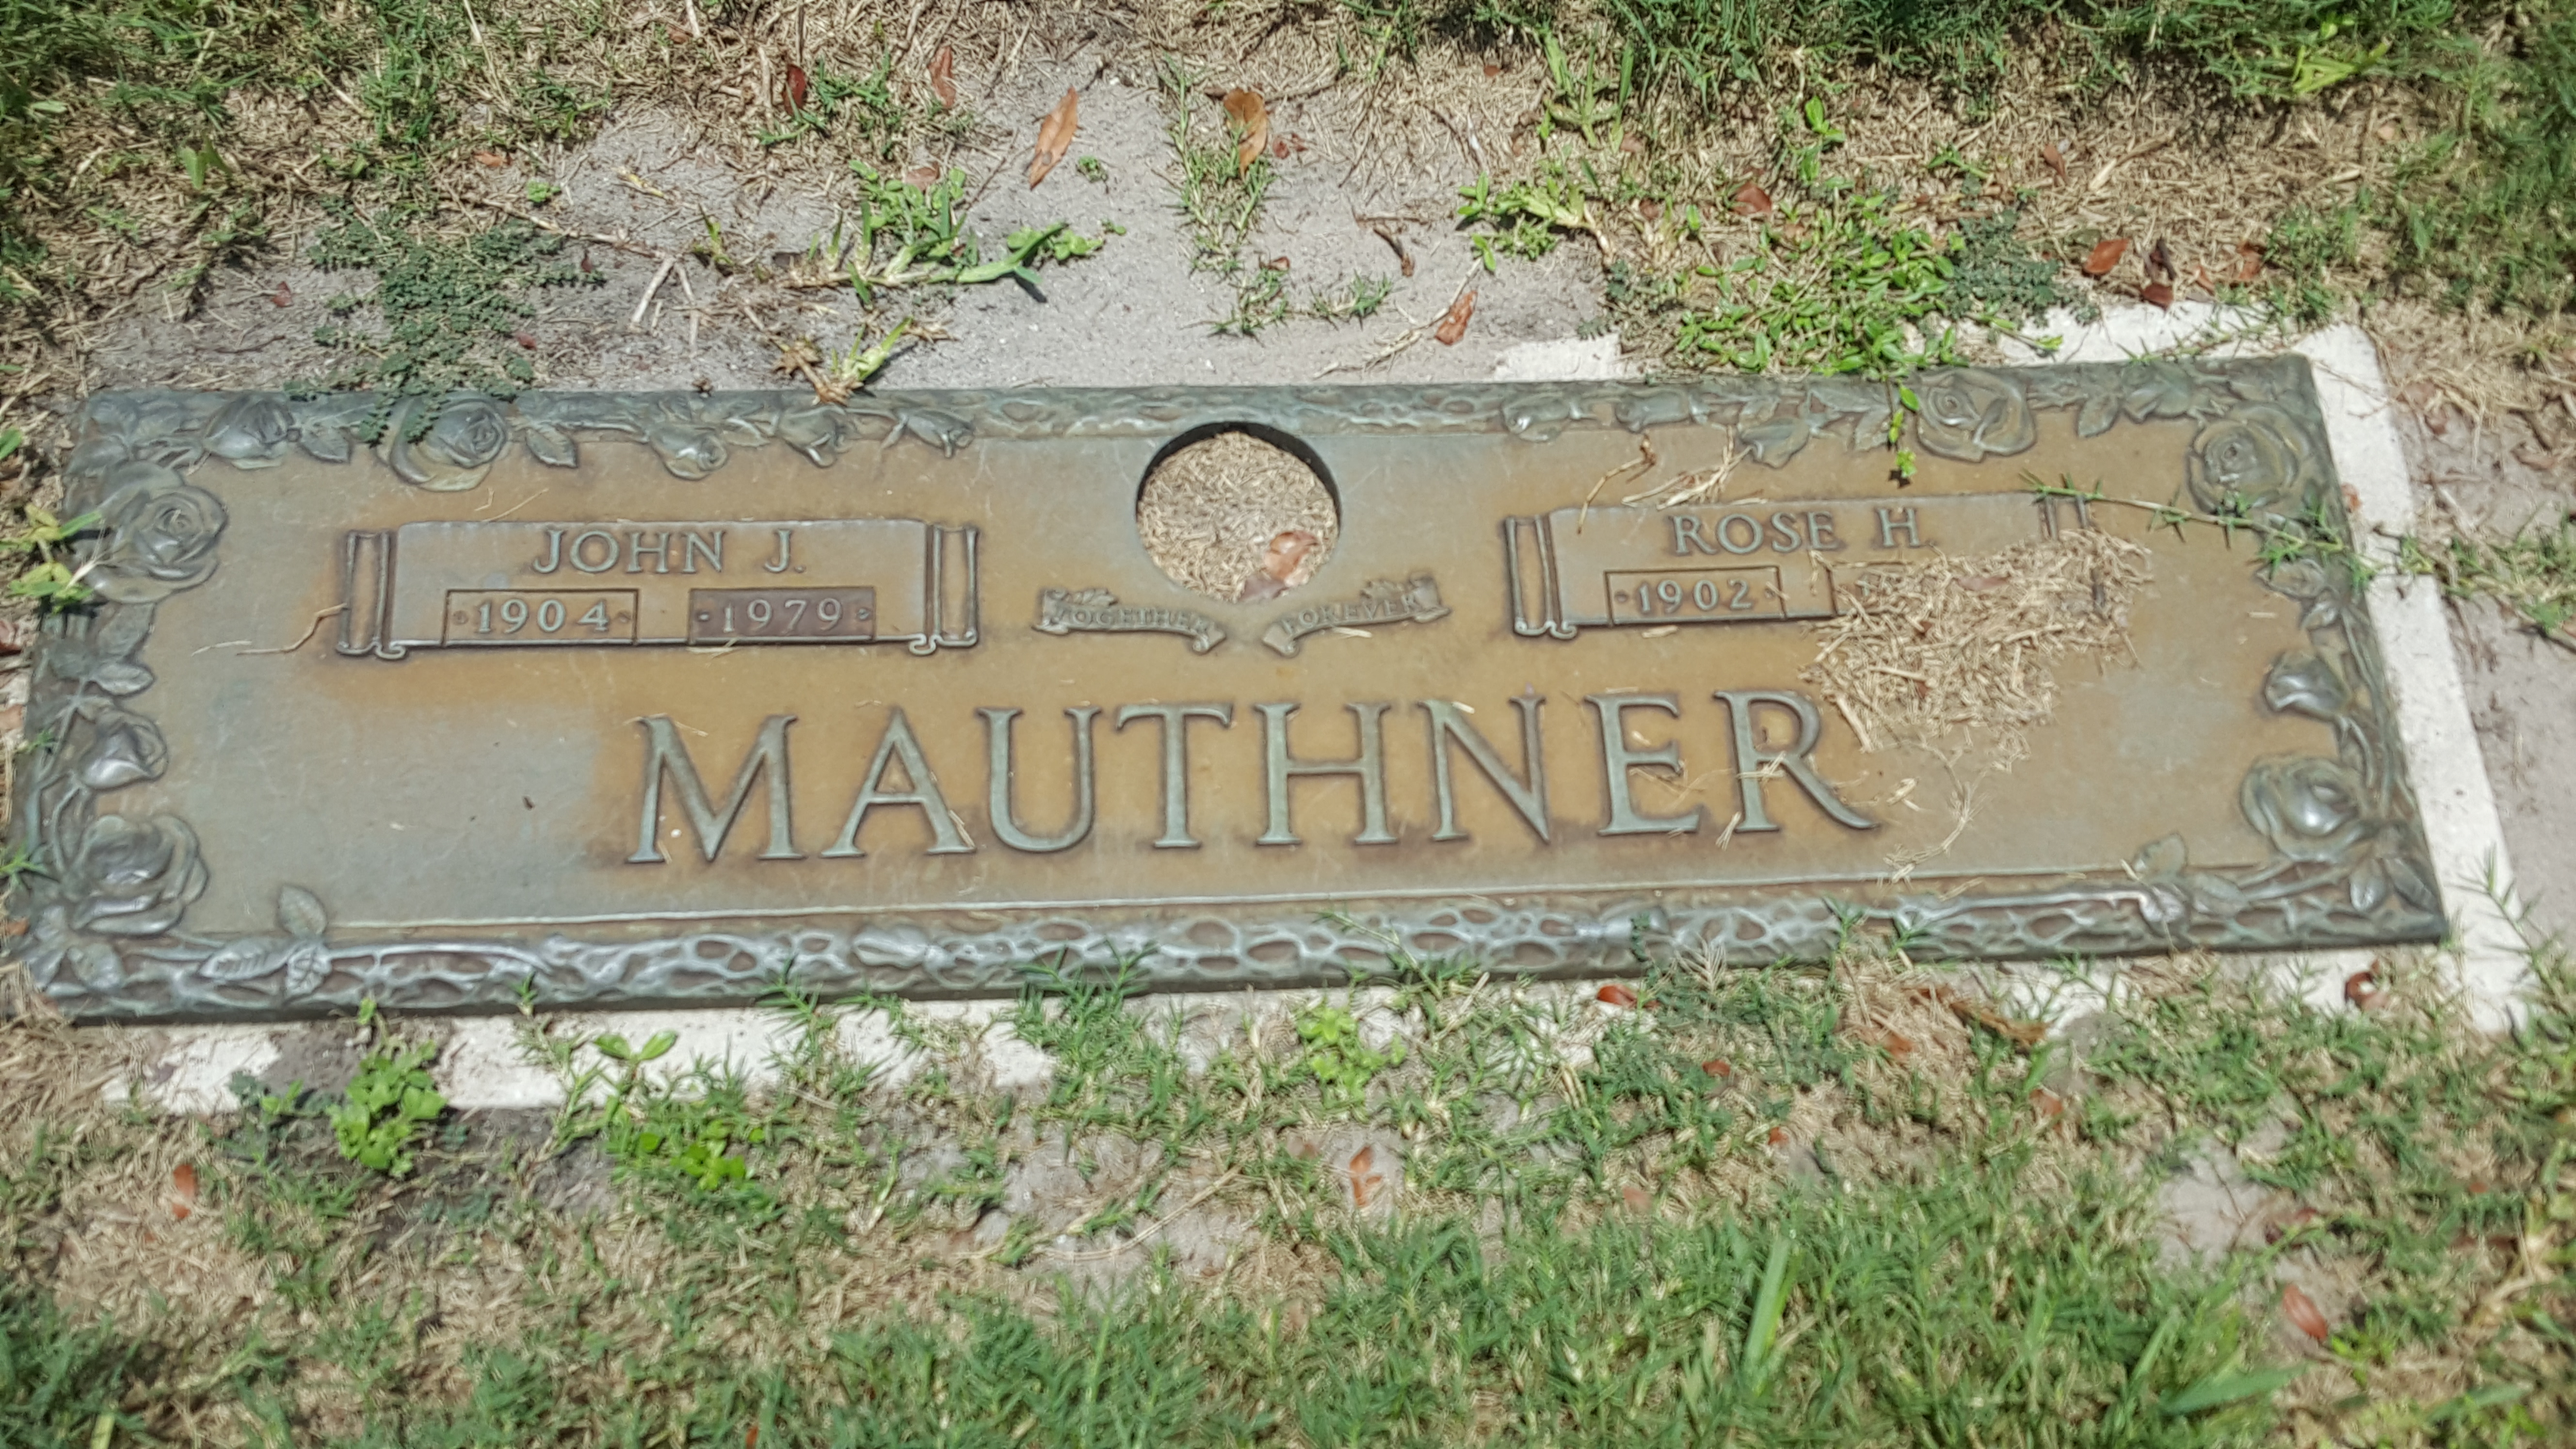 John J Mauthner